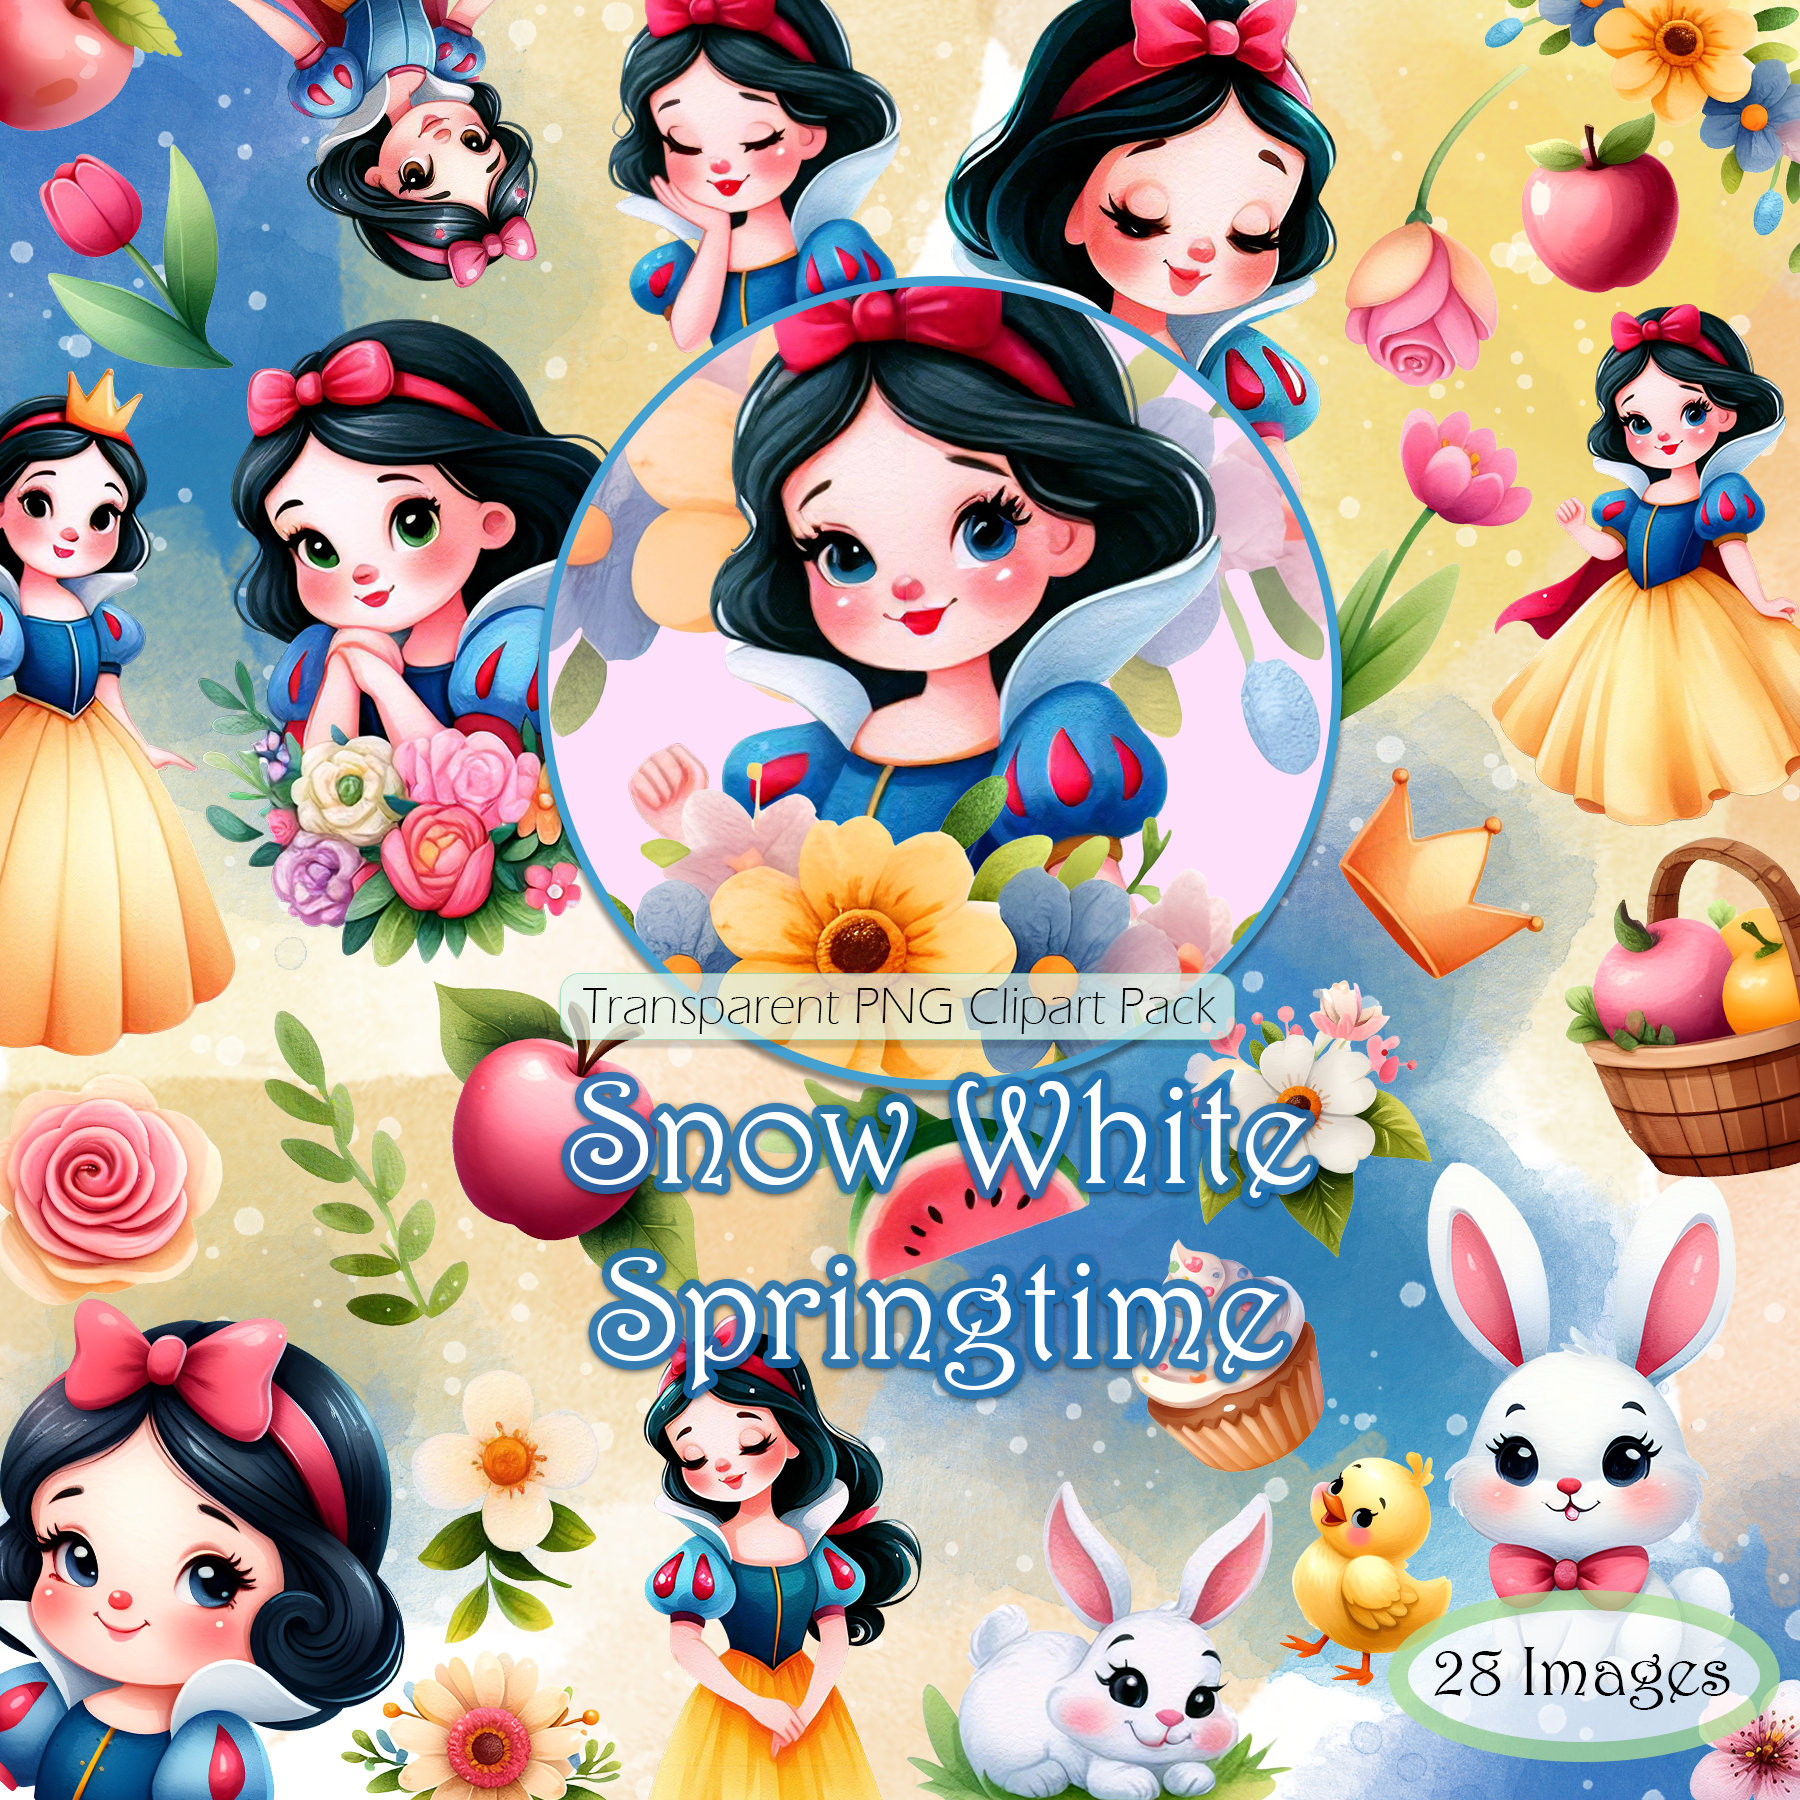 Happy Dwarf Snow White Tree Stump Vintage Personalized Birthday Card - Red  Heart Print